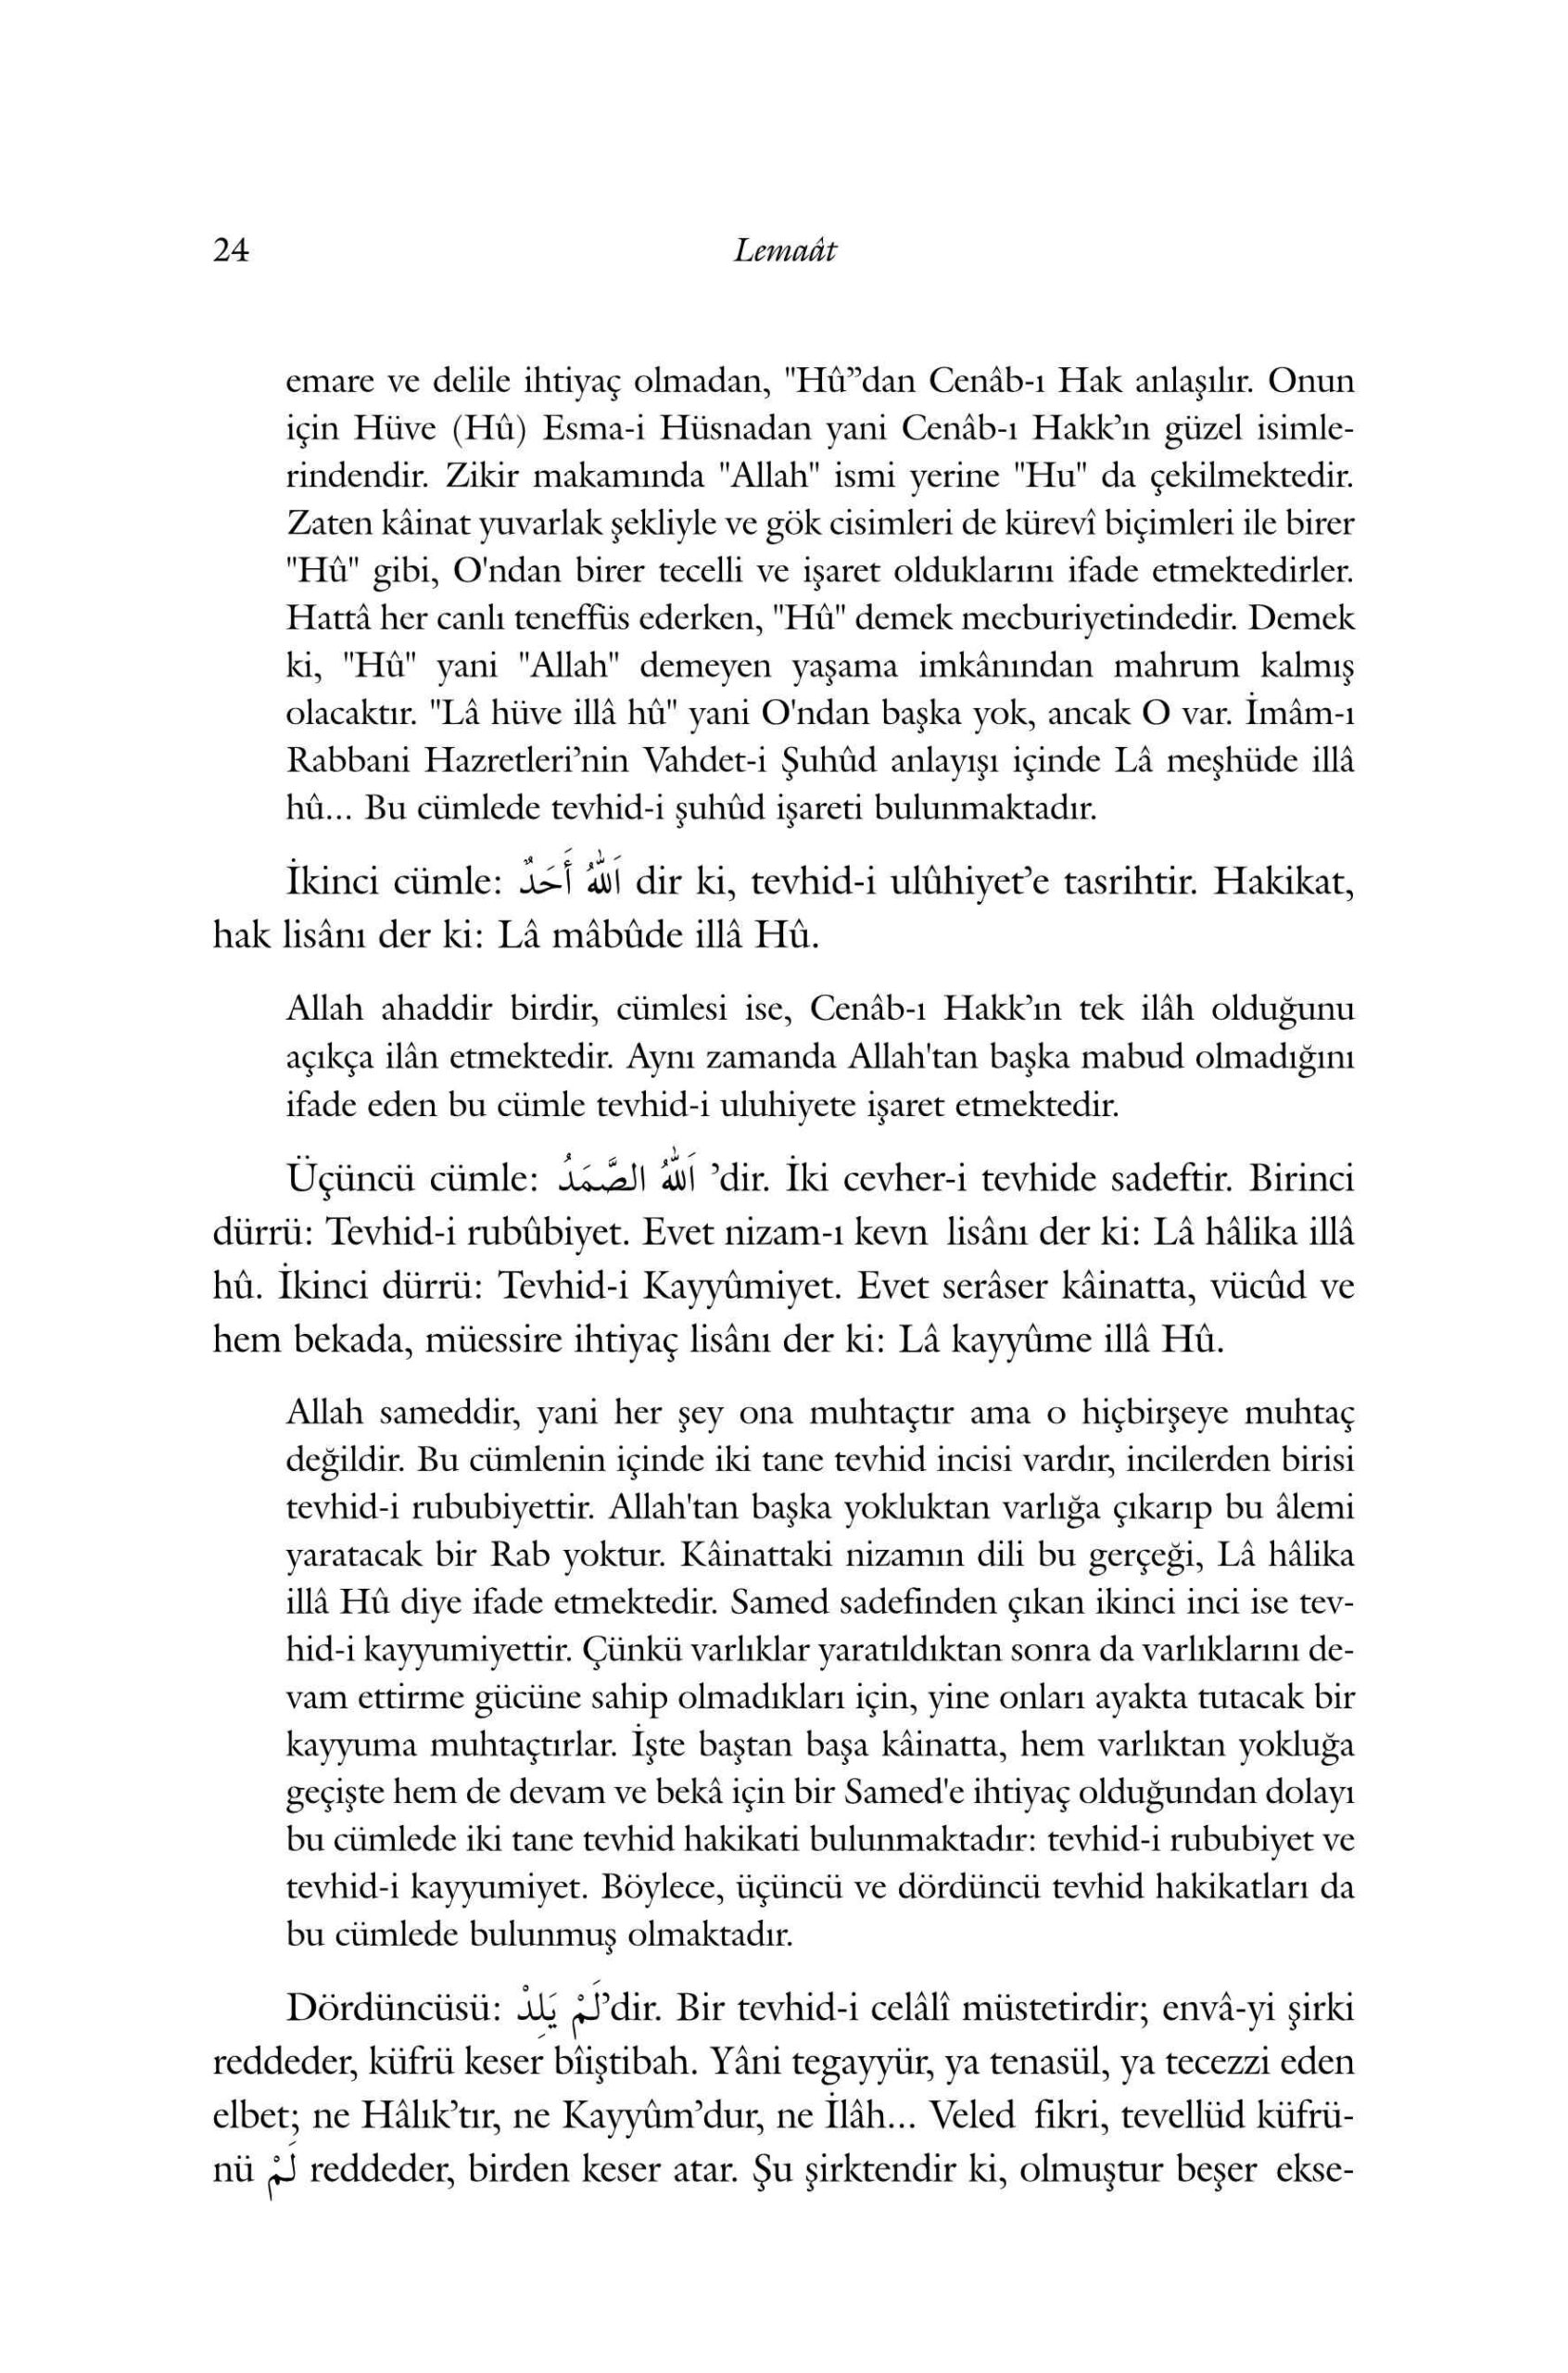 B Said Nursi - Abdullah Aymaz - Lemaat Uzerine - SahdamarY.pdf, 161-Sayfa 